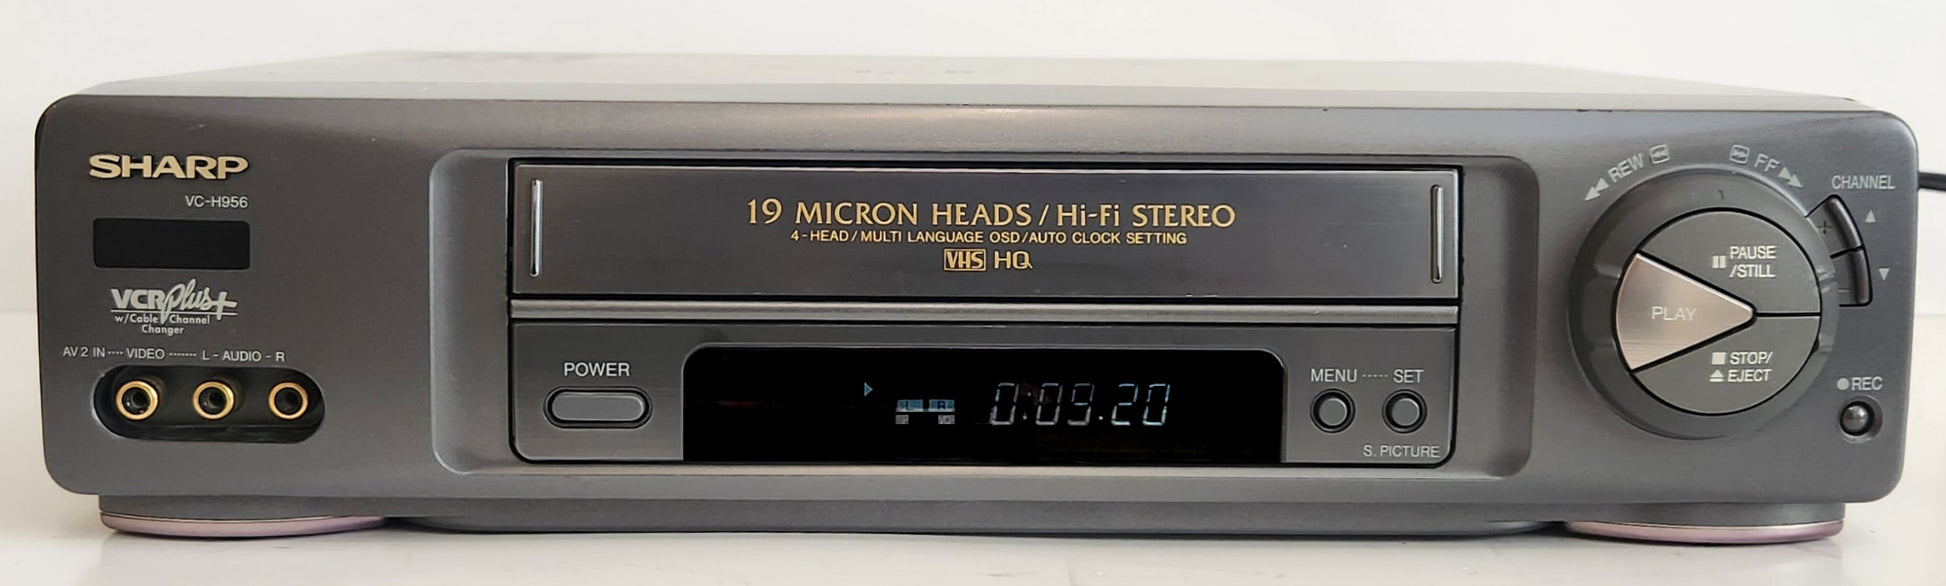 Sharp VC-H956U VCR, 4-Head Hi-Fi Stereo - Front